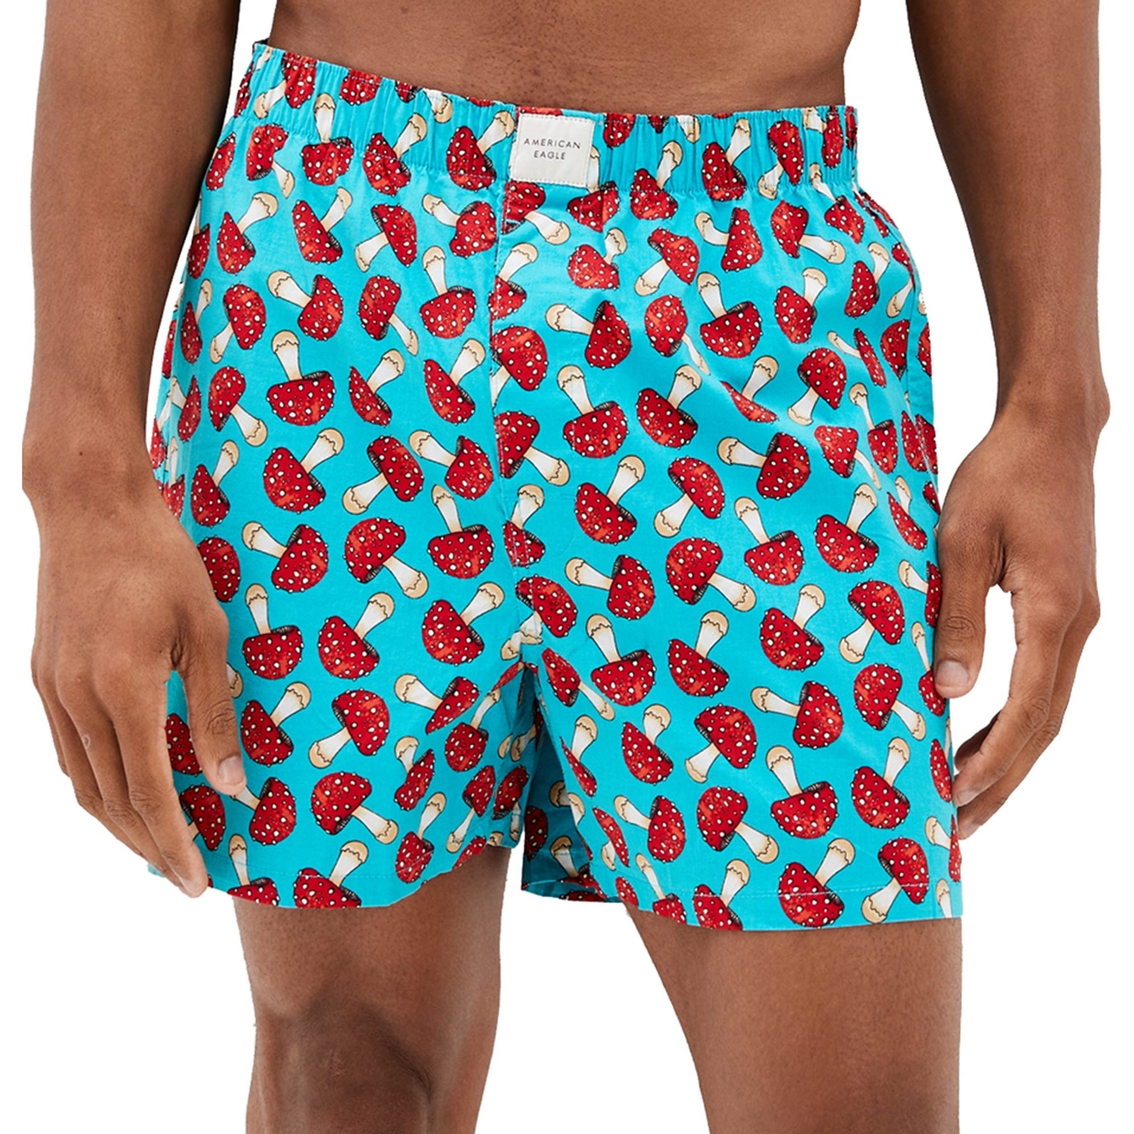 American Eagle Mushrooms Stretch Boxer Shorts | Underwear | Clothing ...